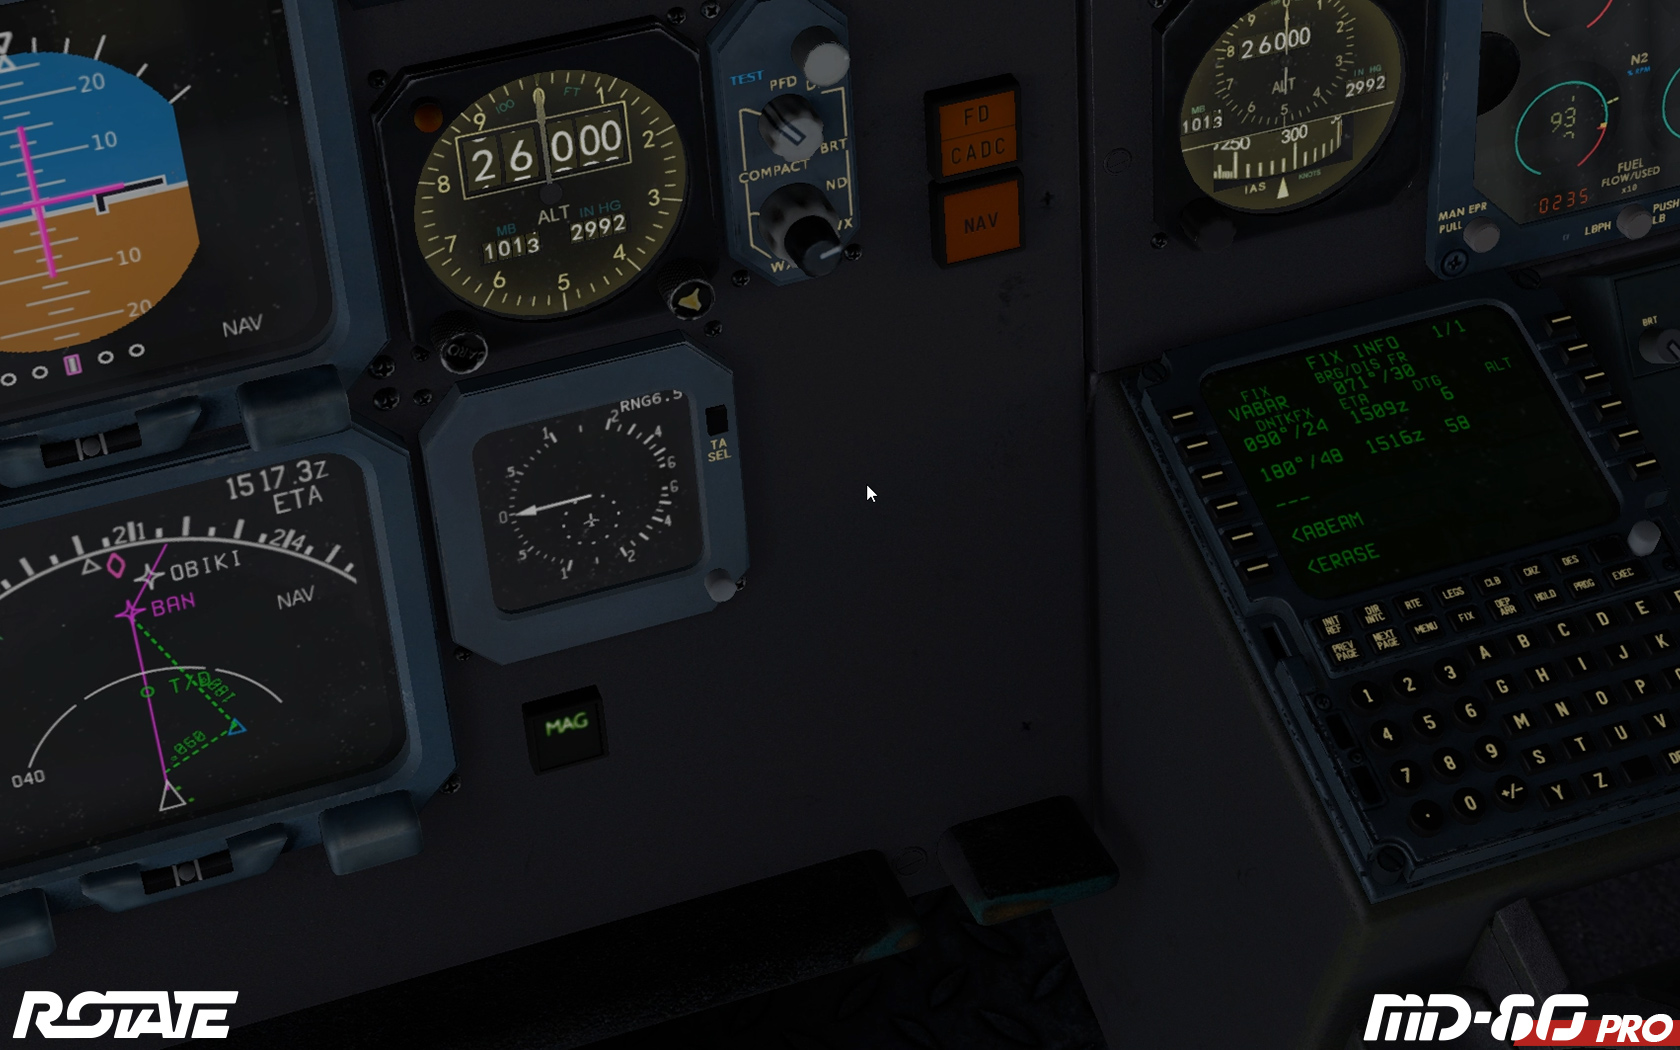 Rotate MD-80v1.40 Pro. Screenshot 02.